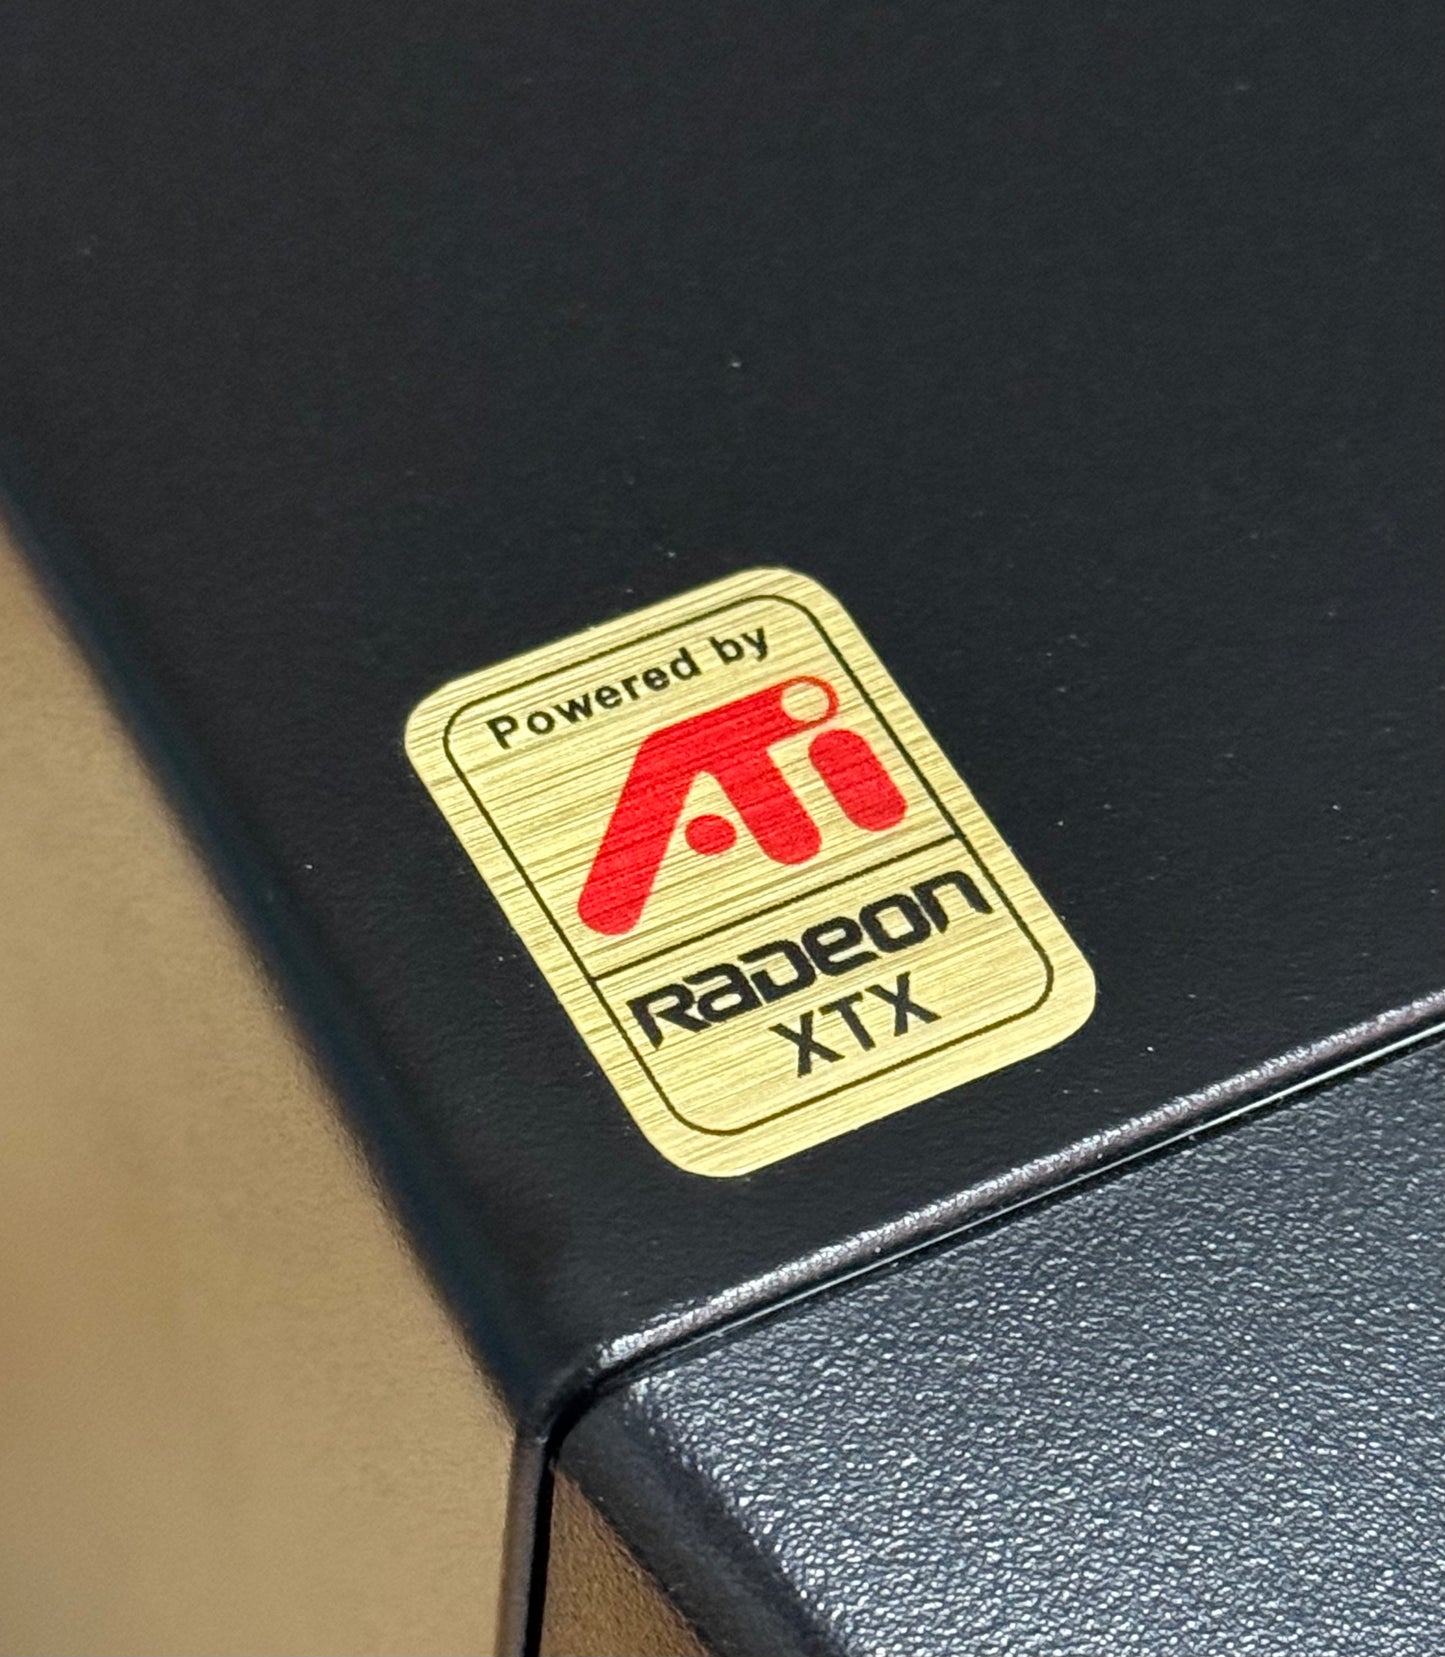 ATI Radeon XTX Series, Powered By Case Badge Sticker - Gold